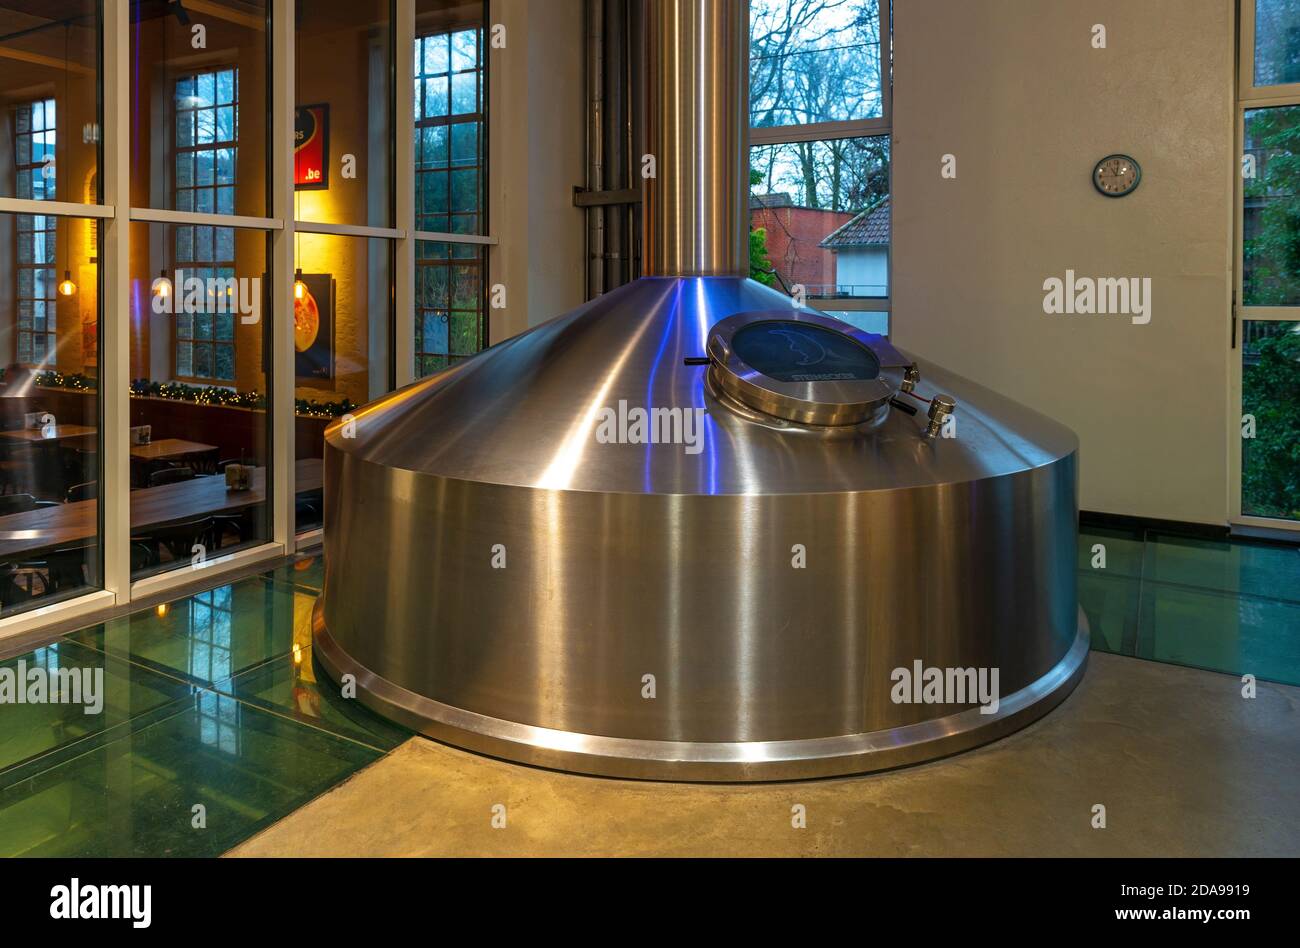 Stainless steel beer tank in the beer brewery of the Halve Maan (Half Moon), Bruges, Belgium. Stock Photo